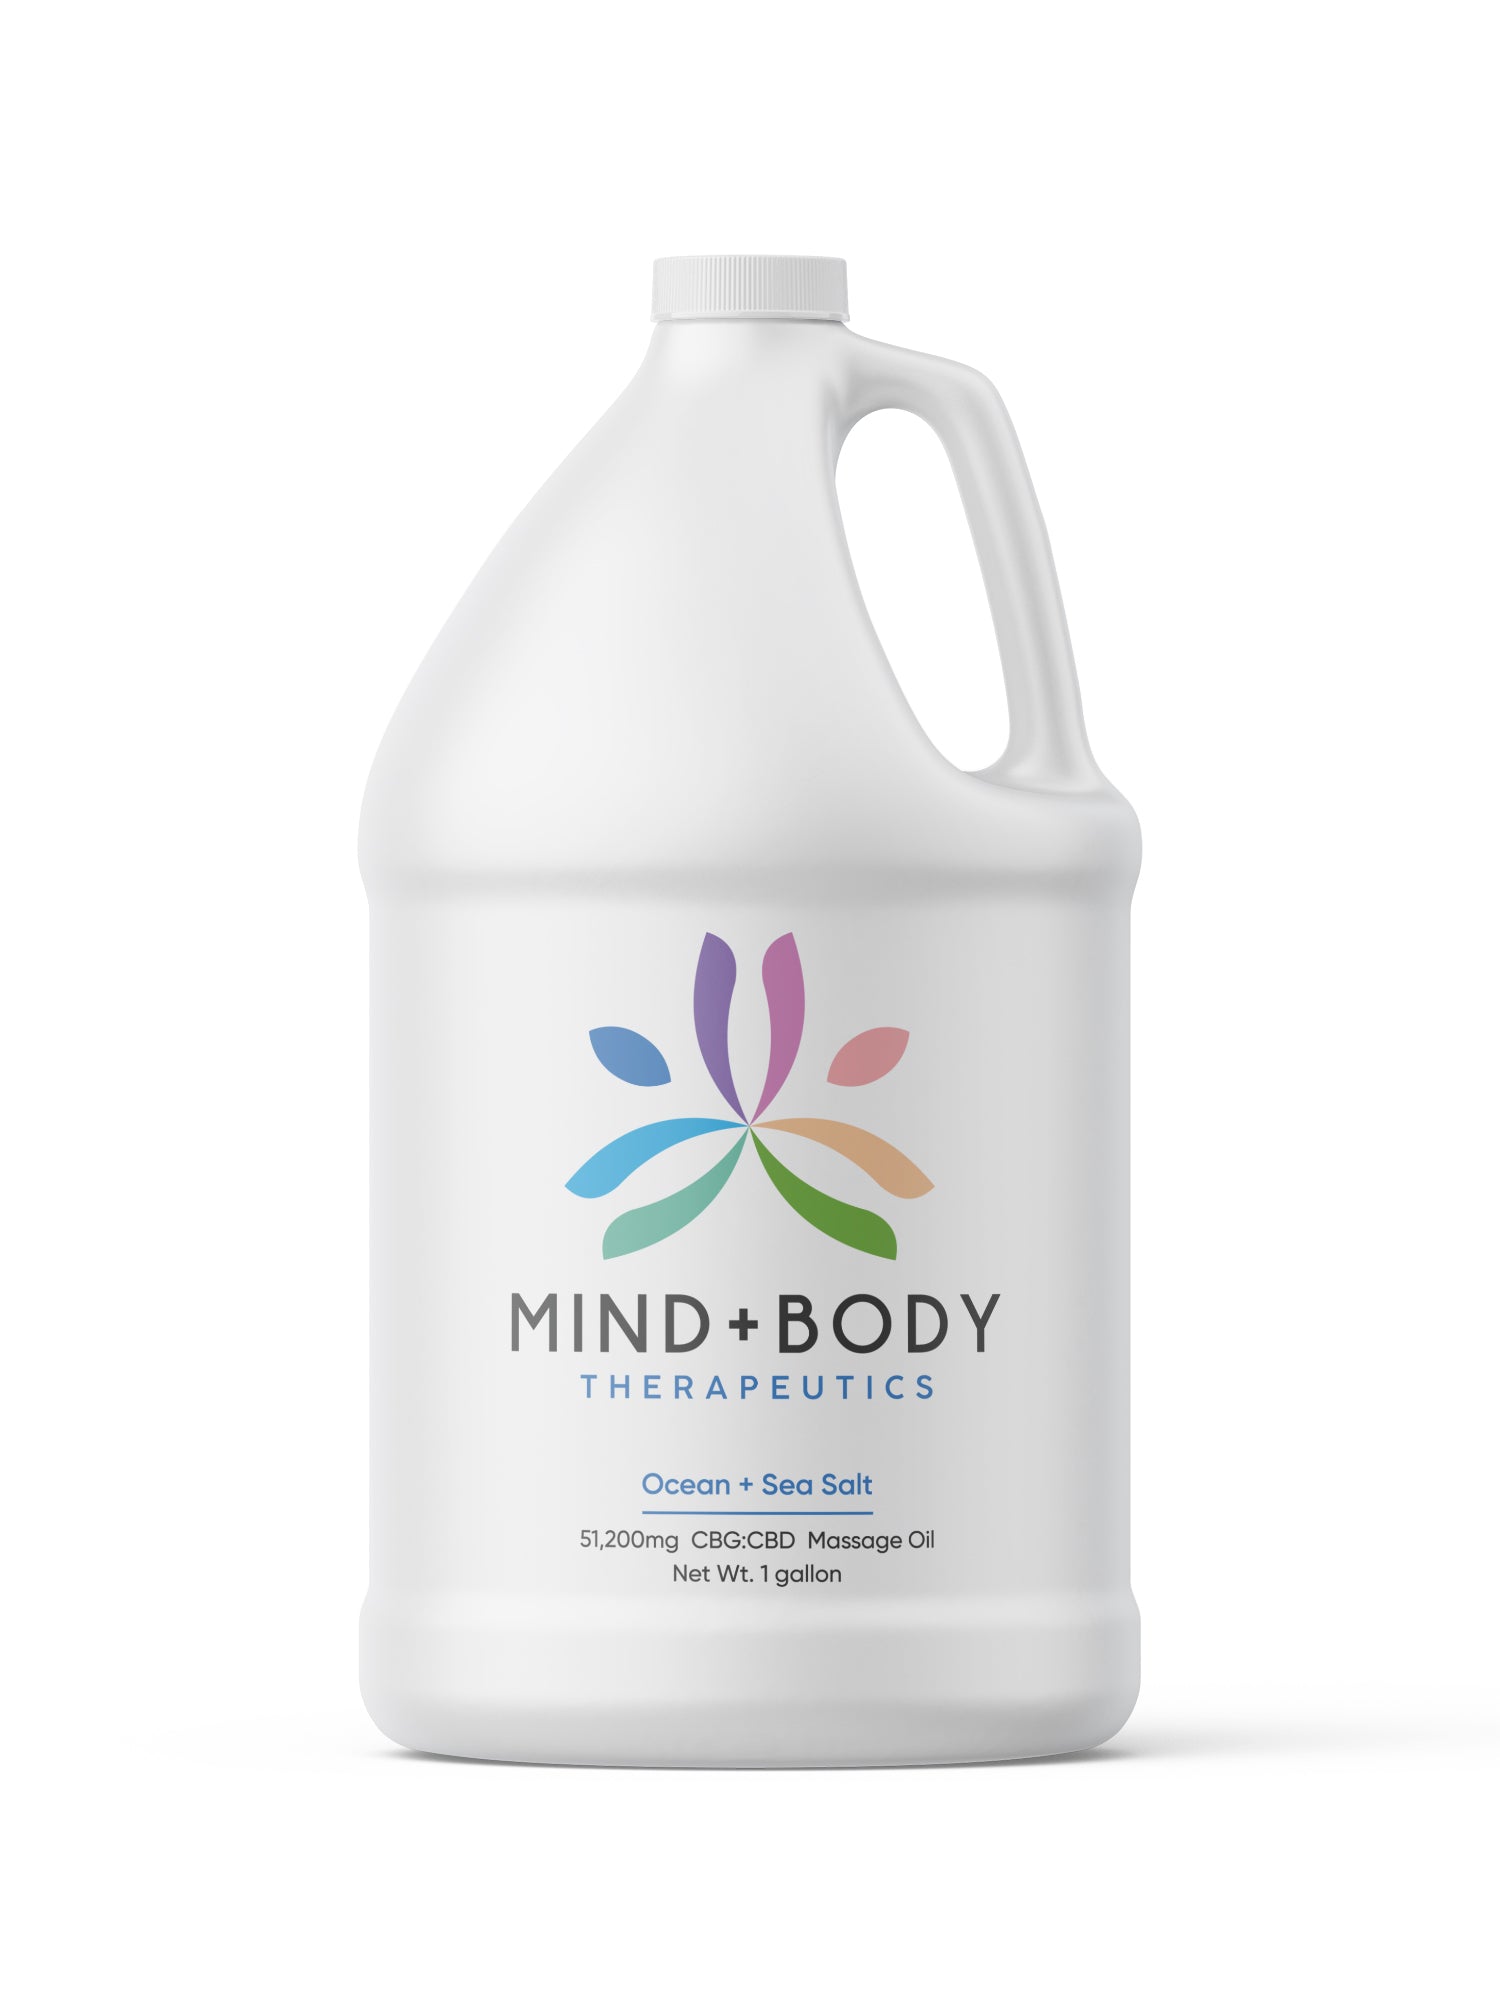 Mind+Body Therapeutics CBG:CBD 51,200mg Massage Oil 1 Gallon - Ocean + Sea Salt